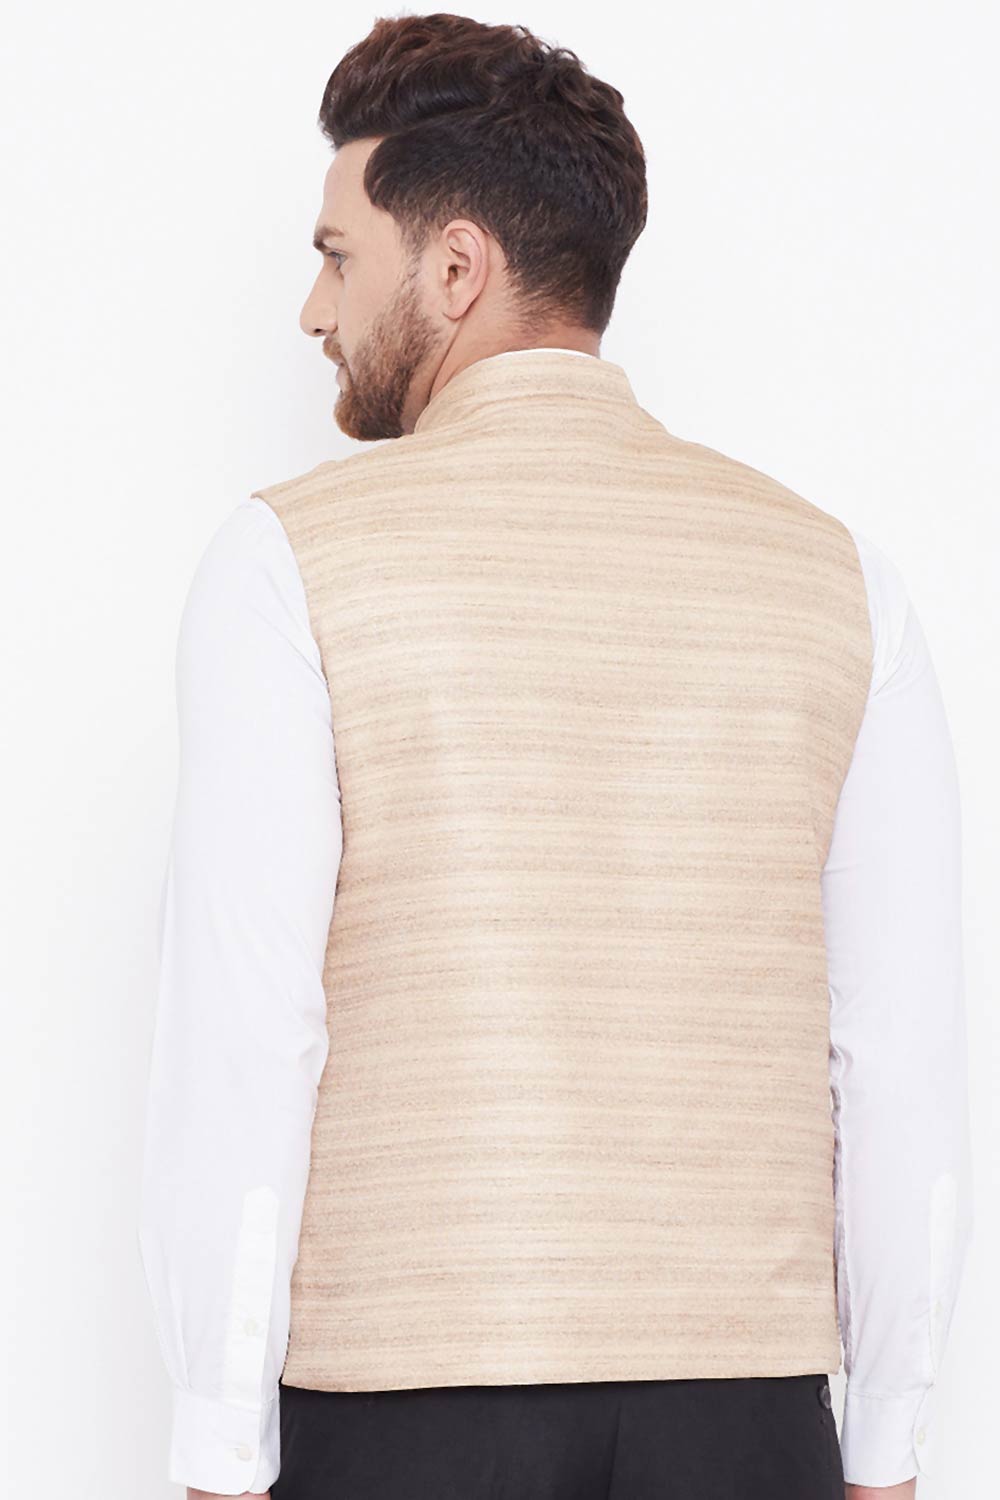 Shop Art Silk Beige Waist Length Nehru Jacket at Karmaplace